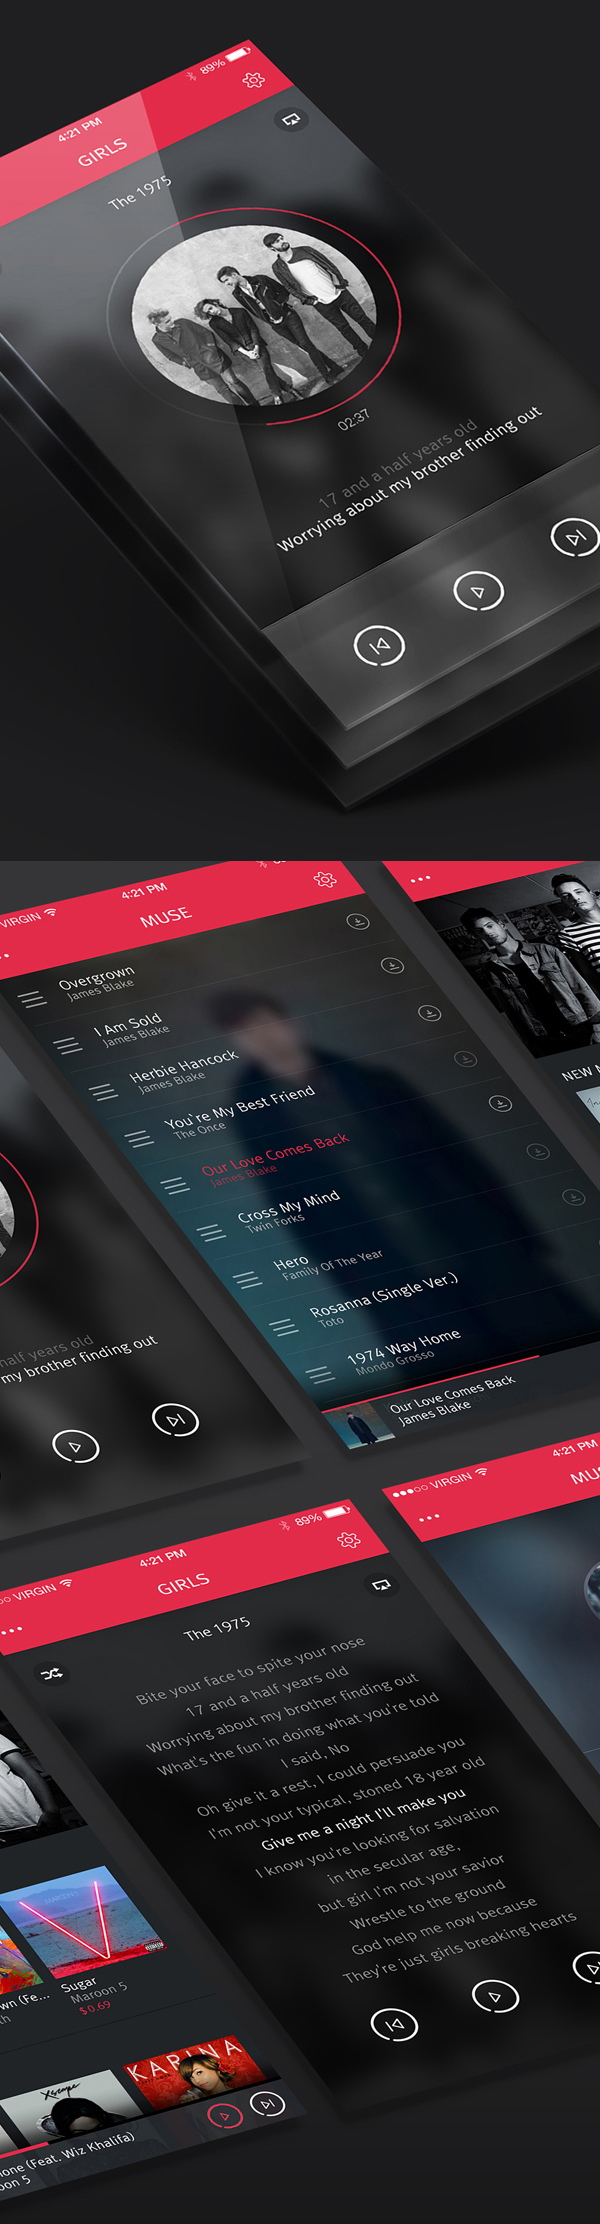 MUSE Music App Concept Design by Nunasonmat SEO